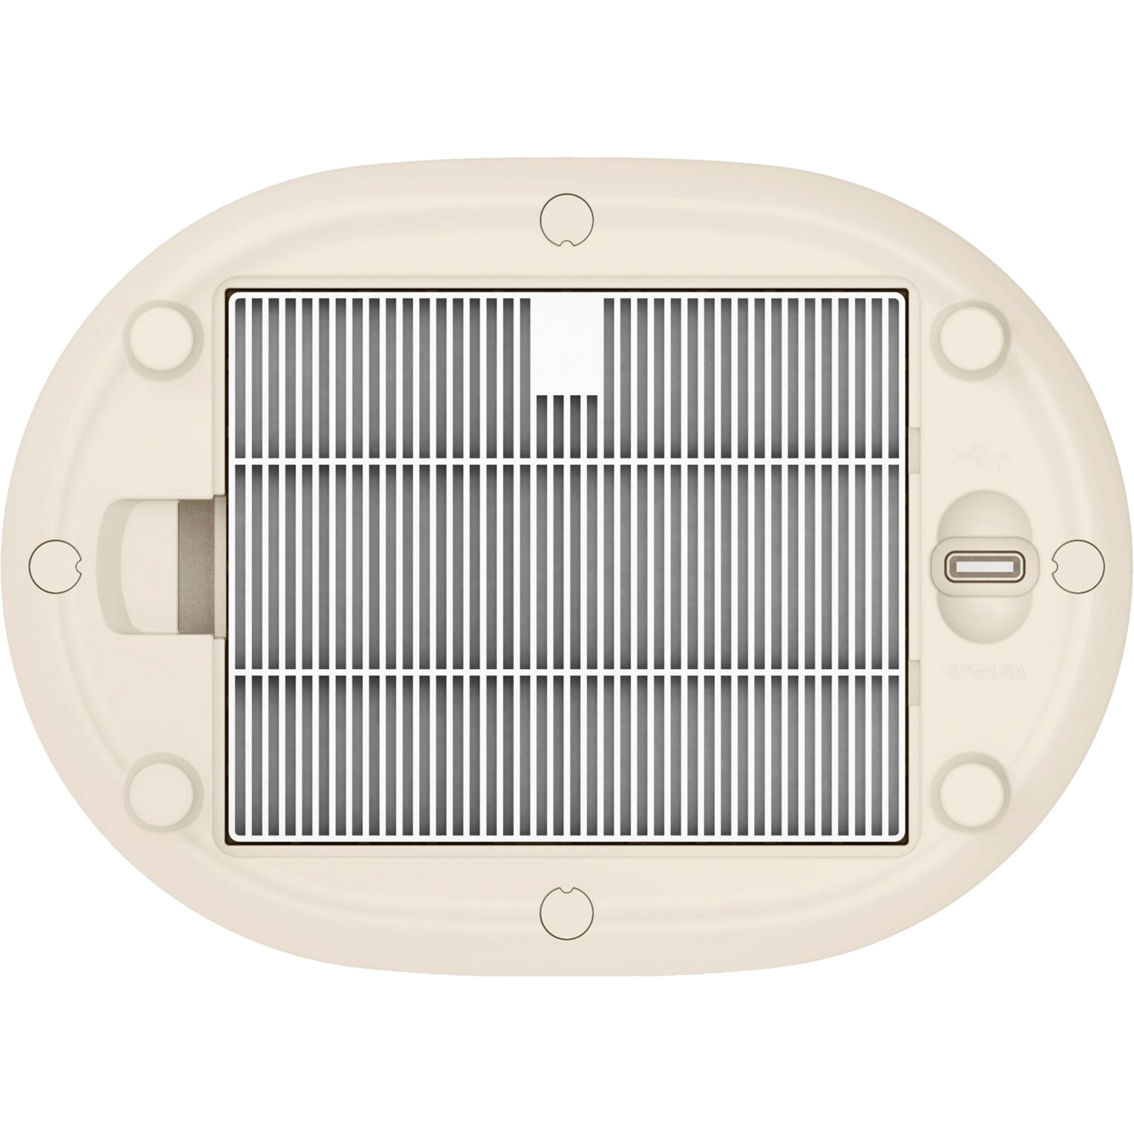 Conair Pure Portable Air Purifier - Image 2 of 2